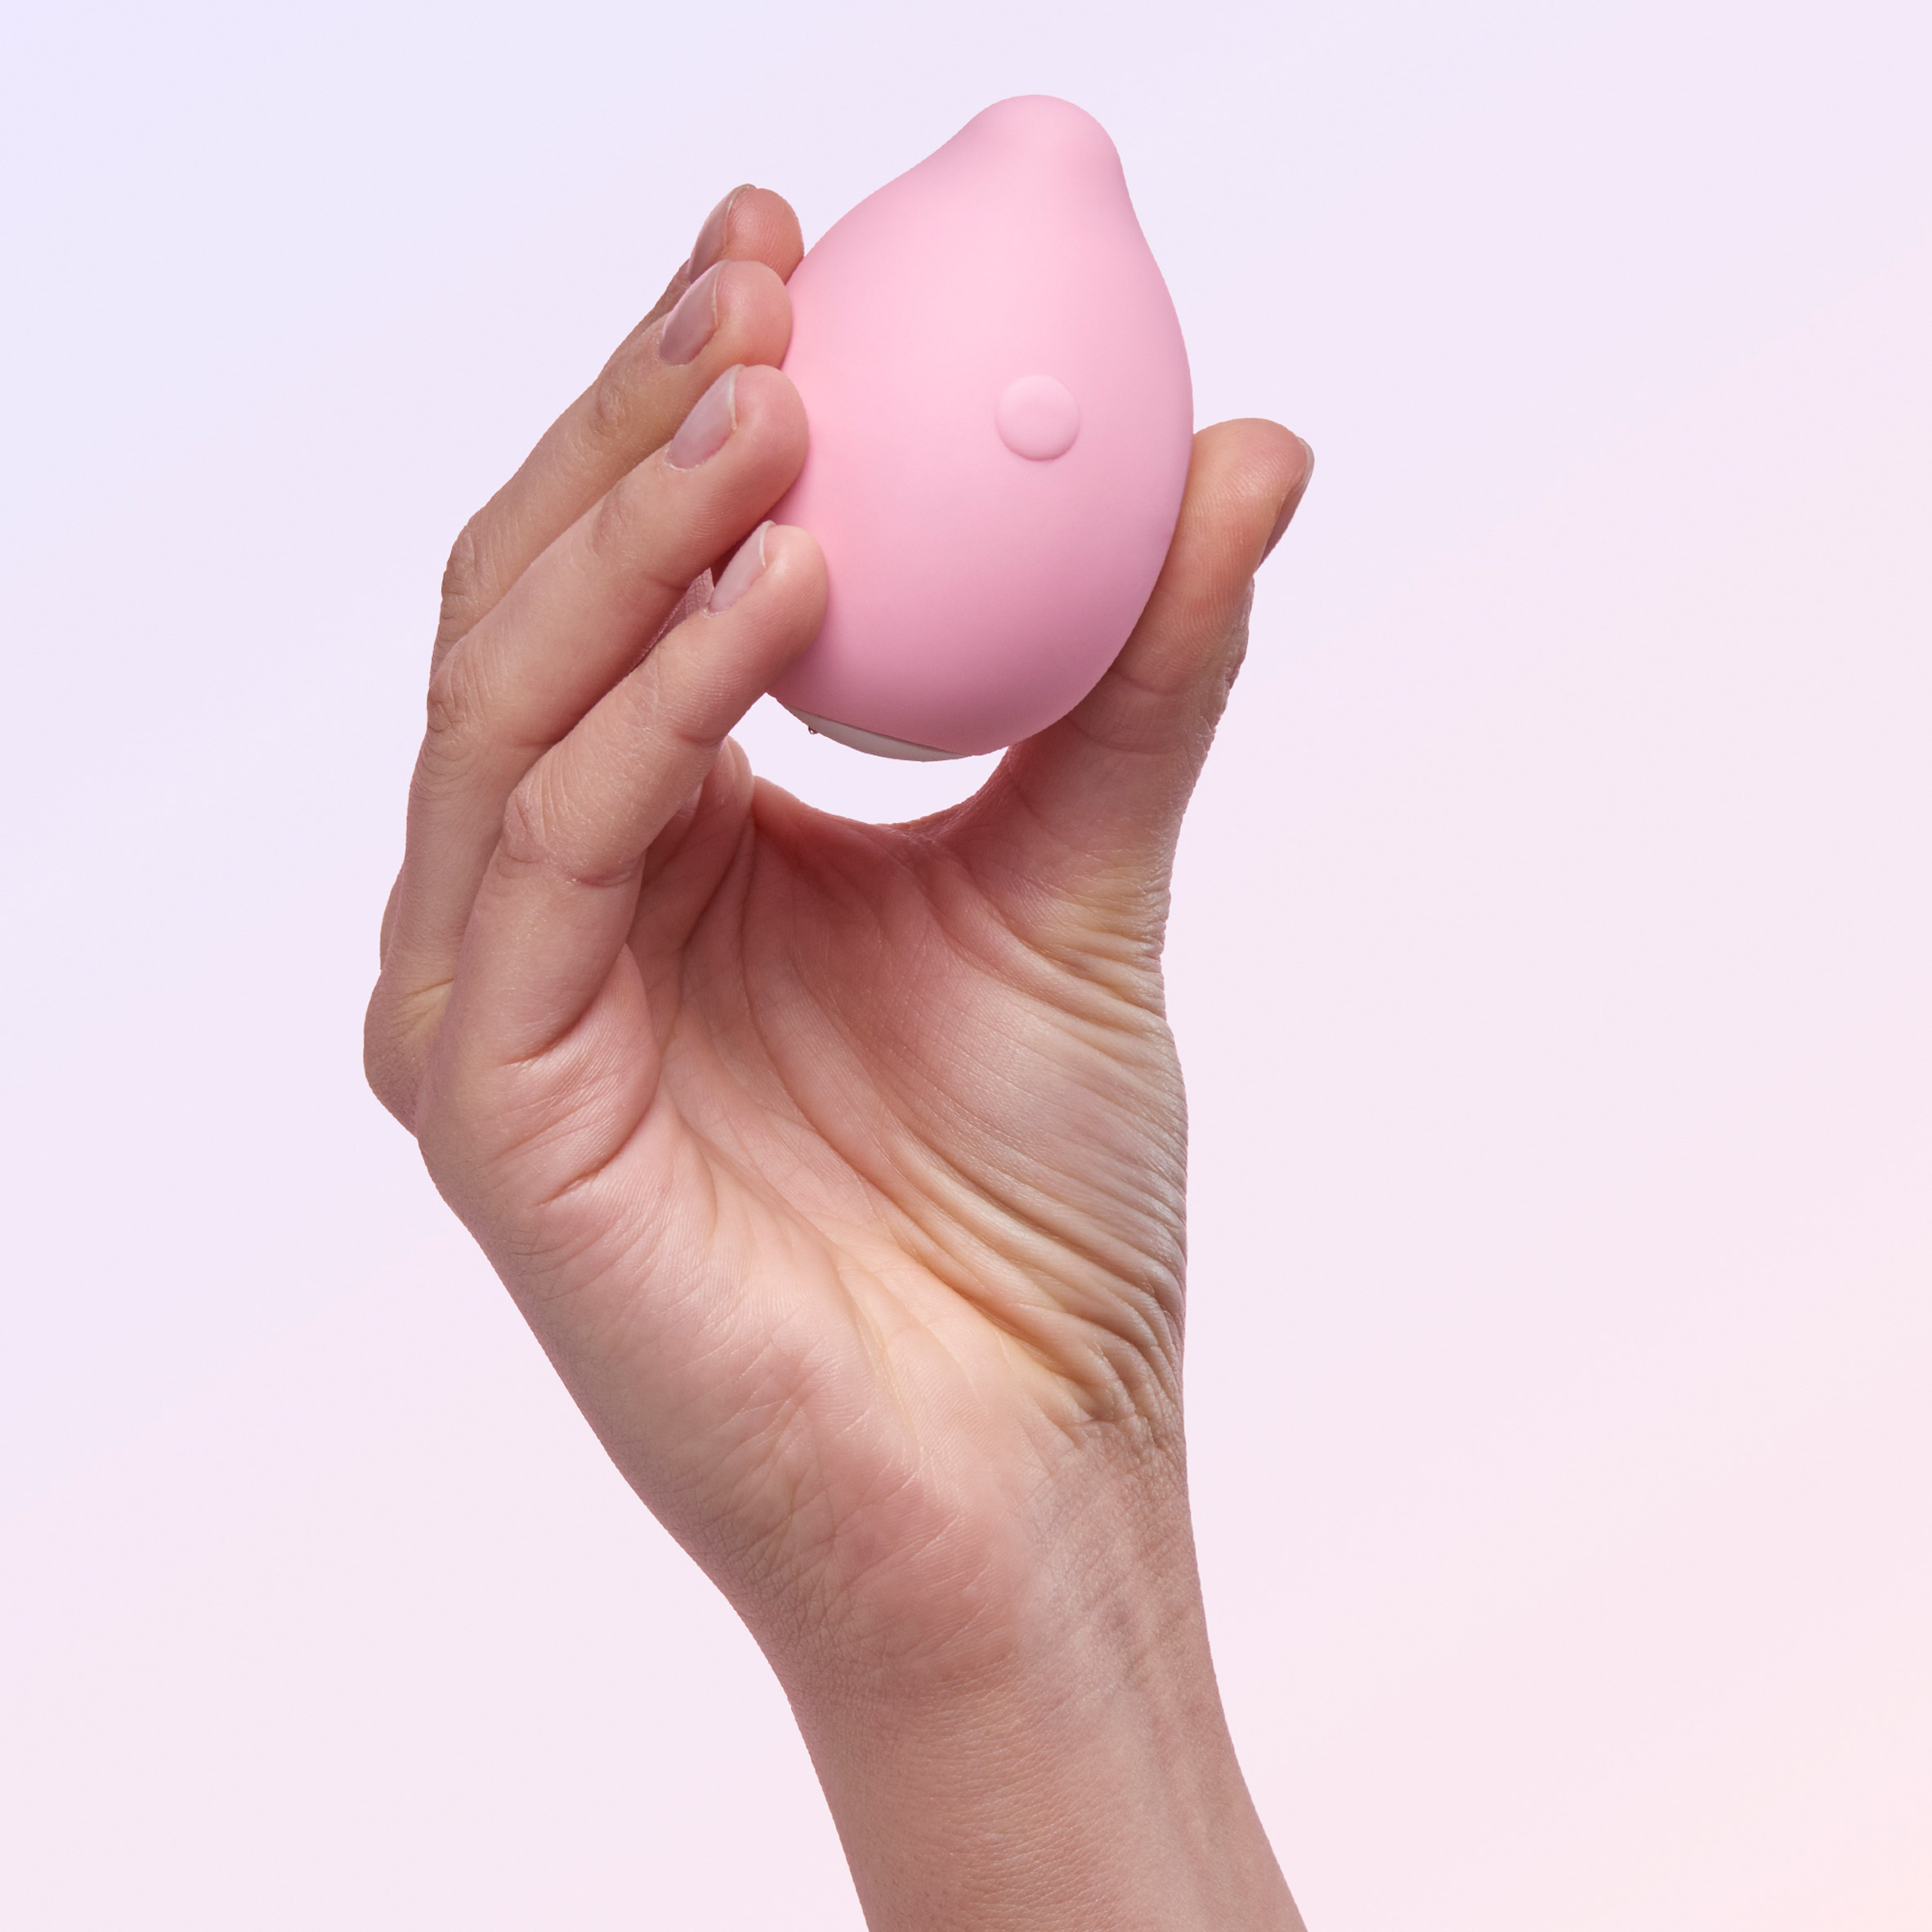 Sextech Startups Offer Minimal Sex Toys Instead Of Penis Shaped Vibrators